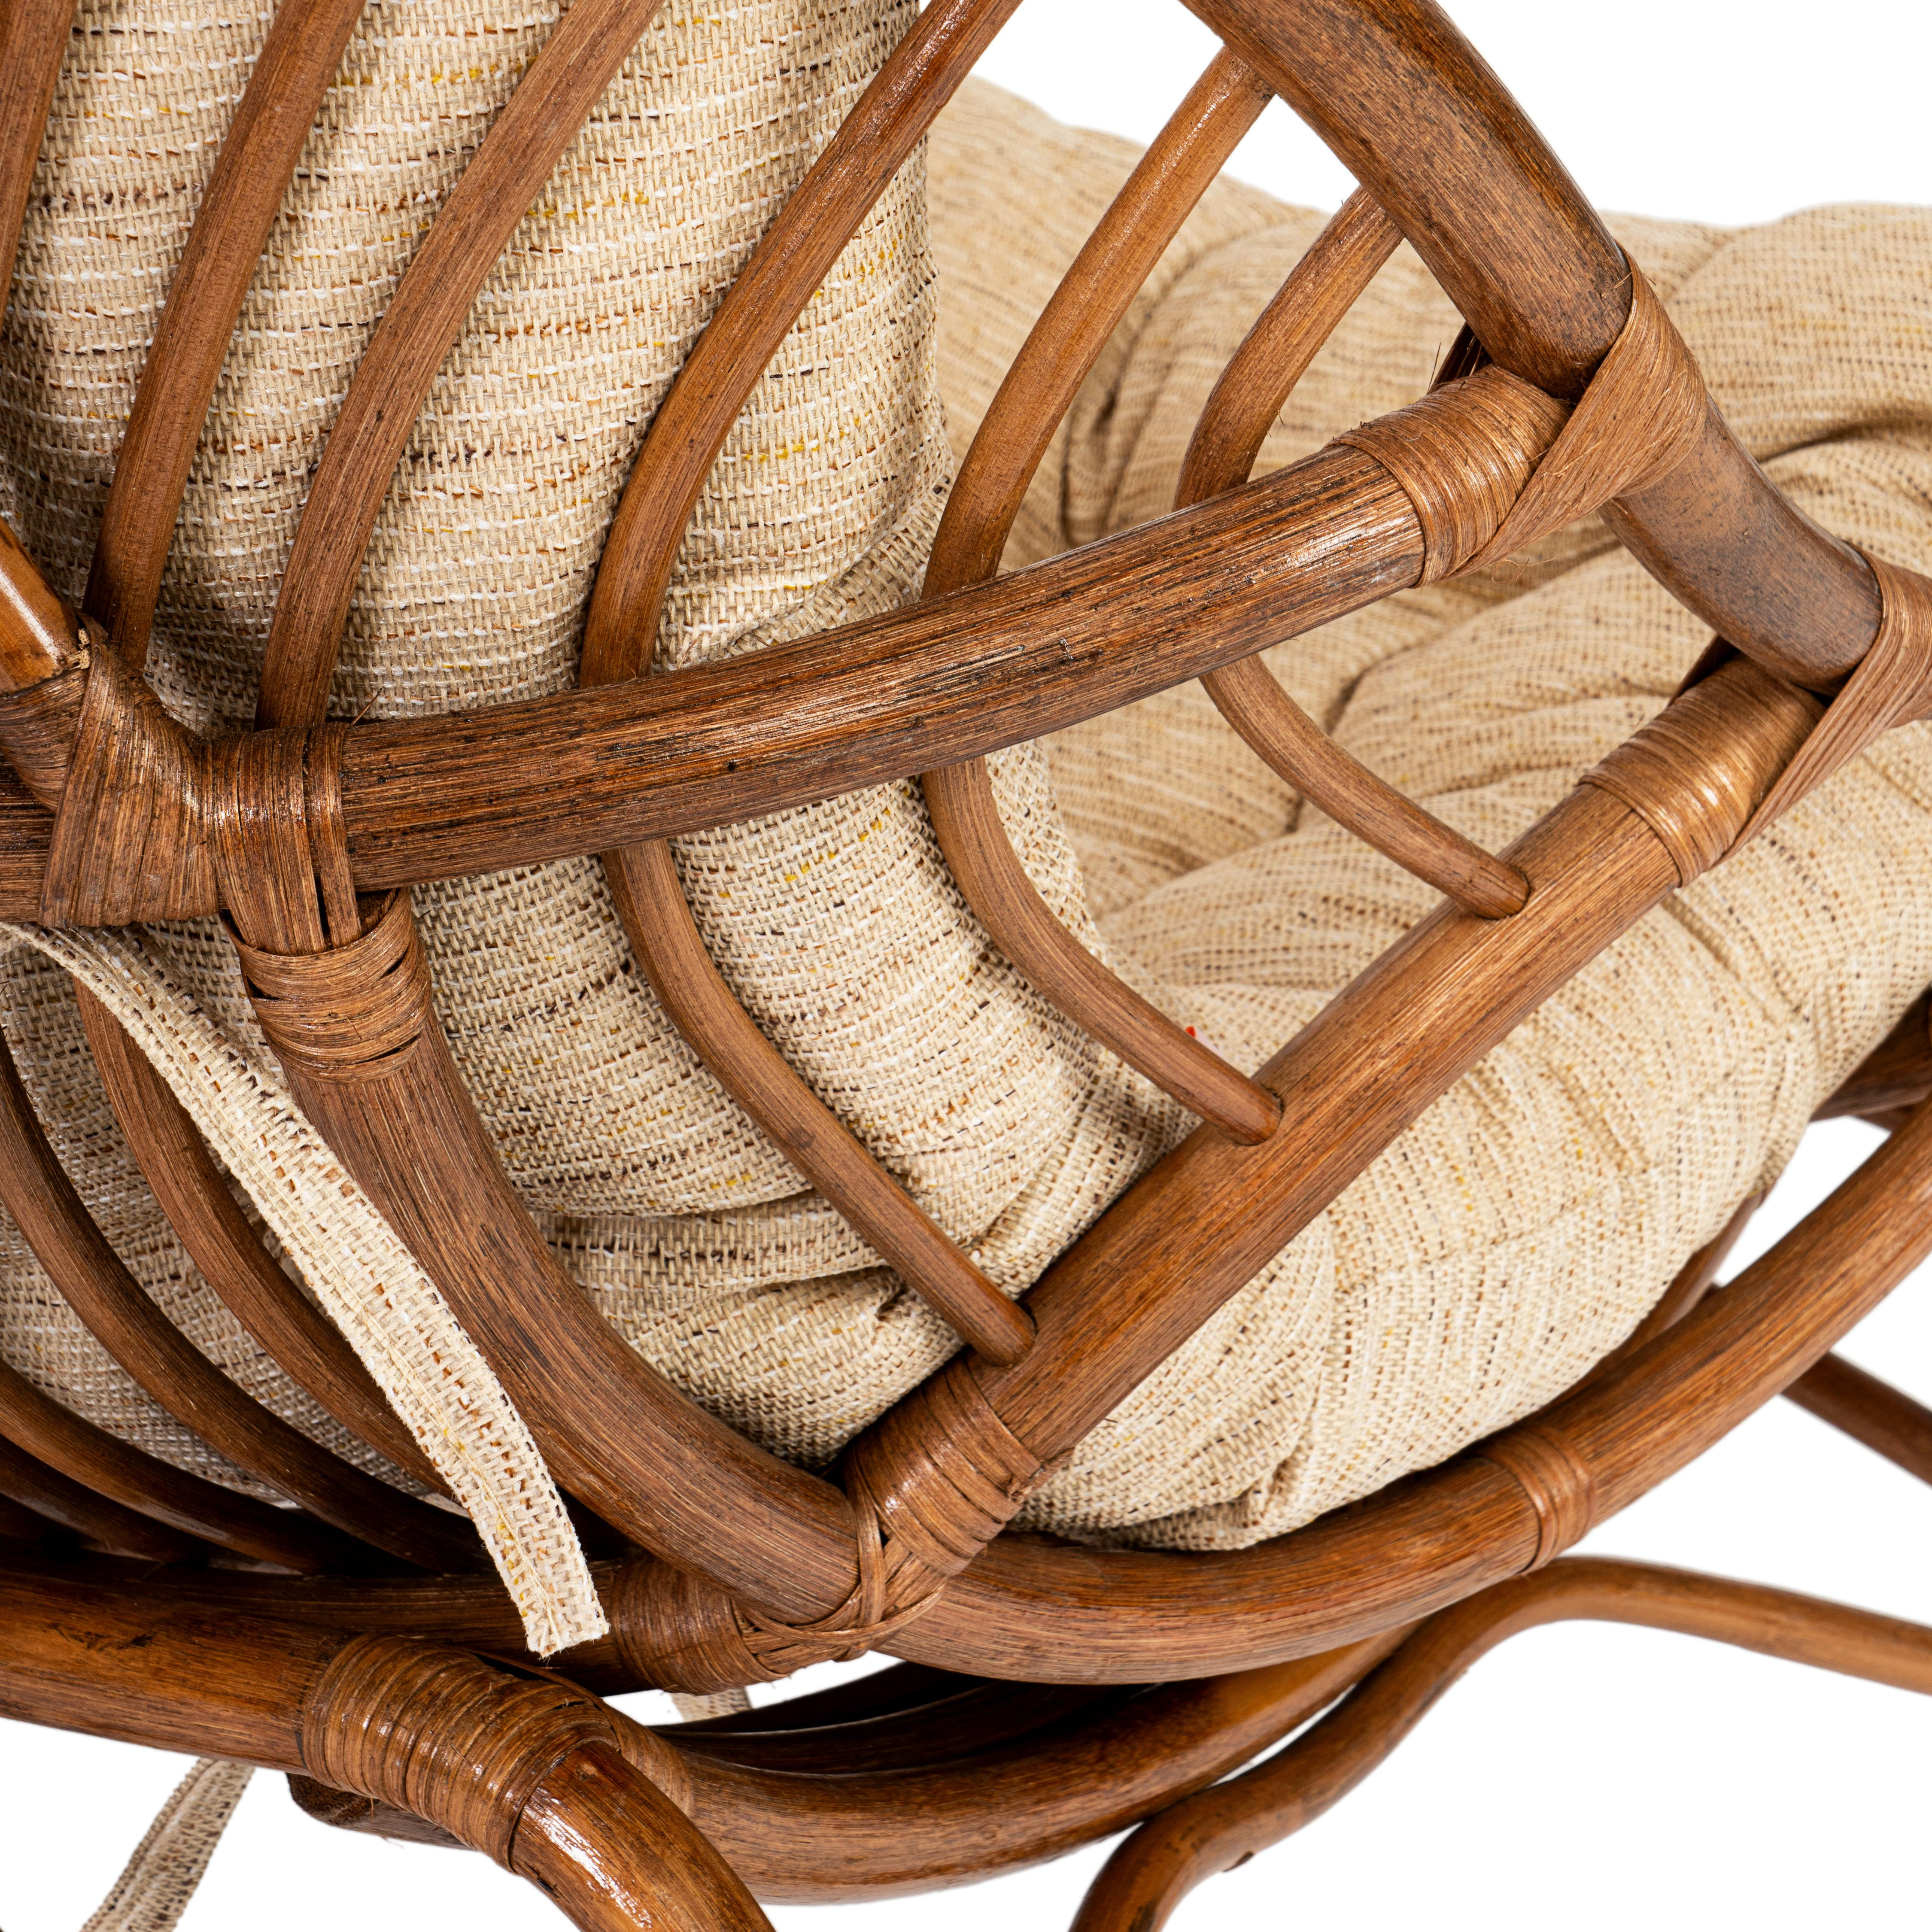 Кресло VENICE / с подушкой / coco brown (коричневый кокос)